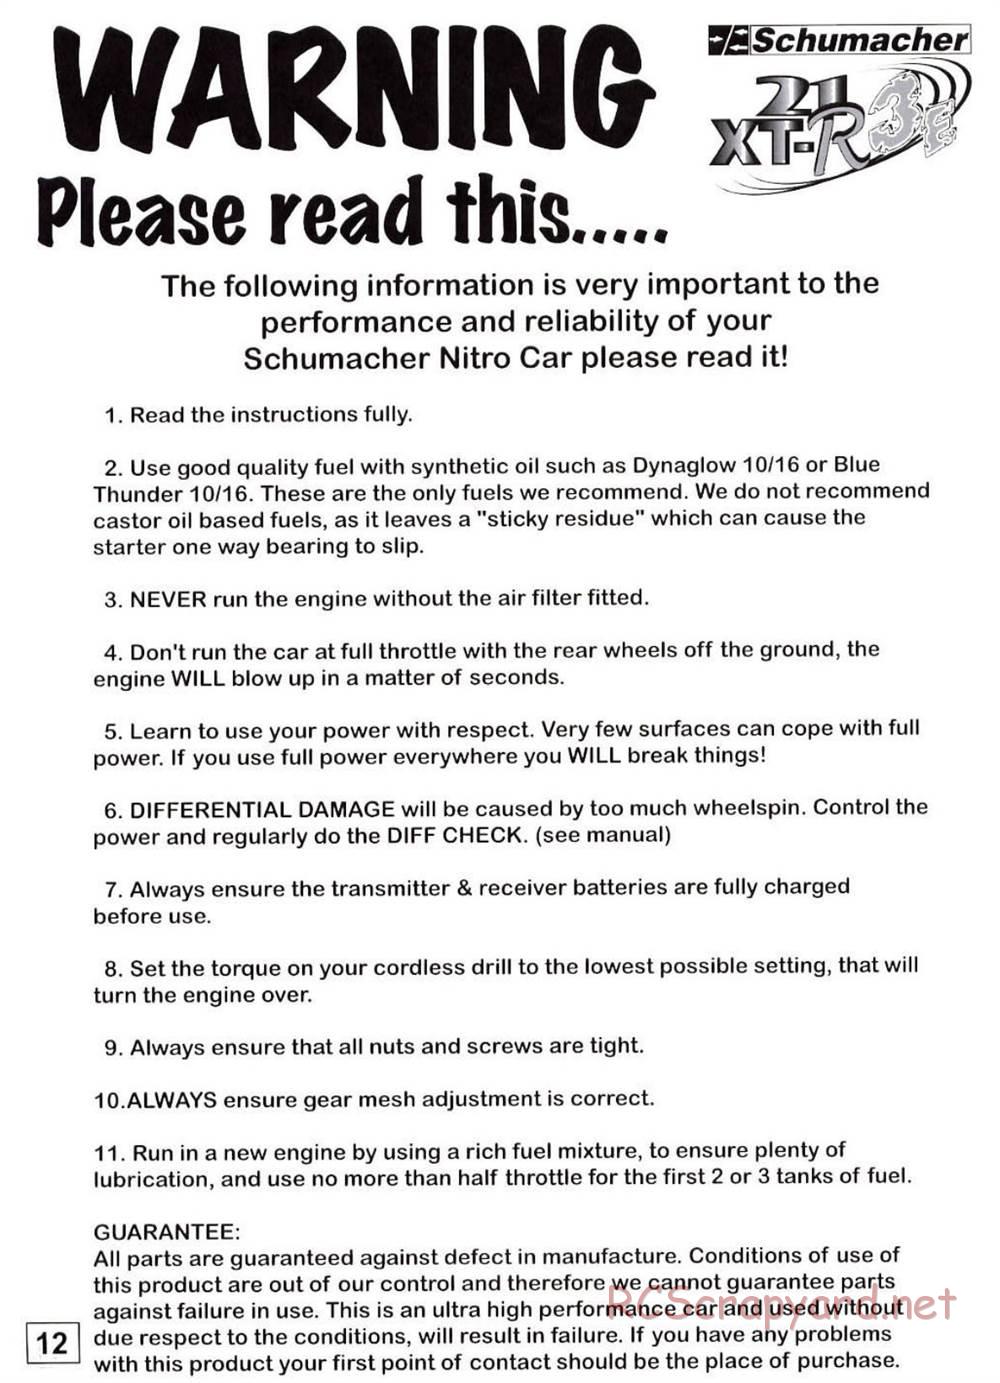 Schumacher - Nitro 21 XT-R3E - Manual - Page 6